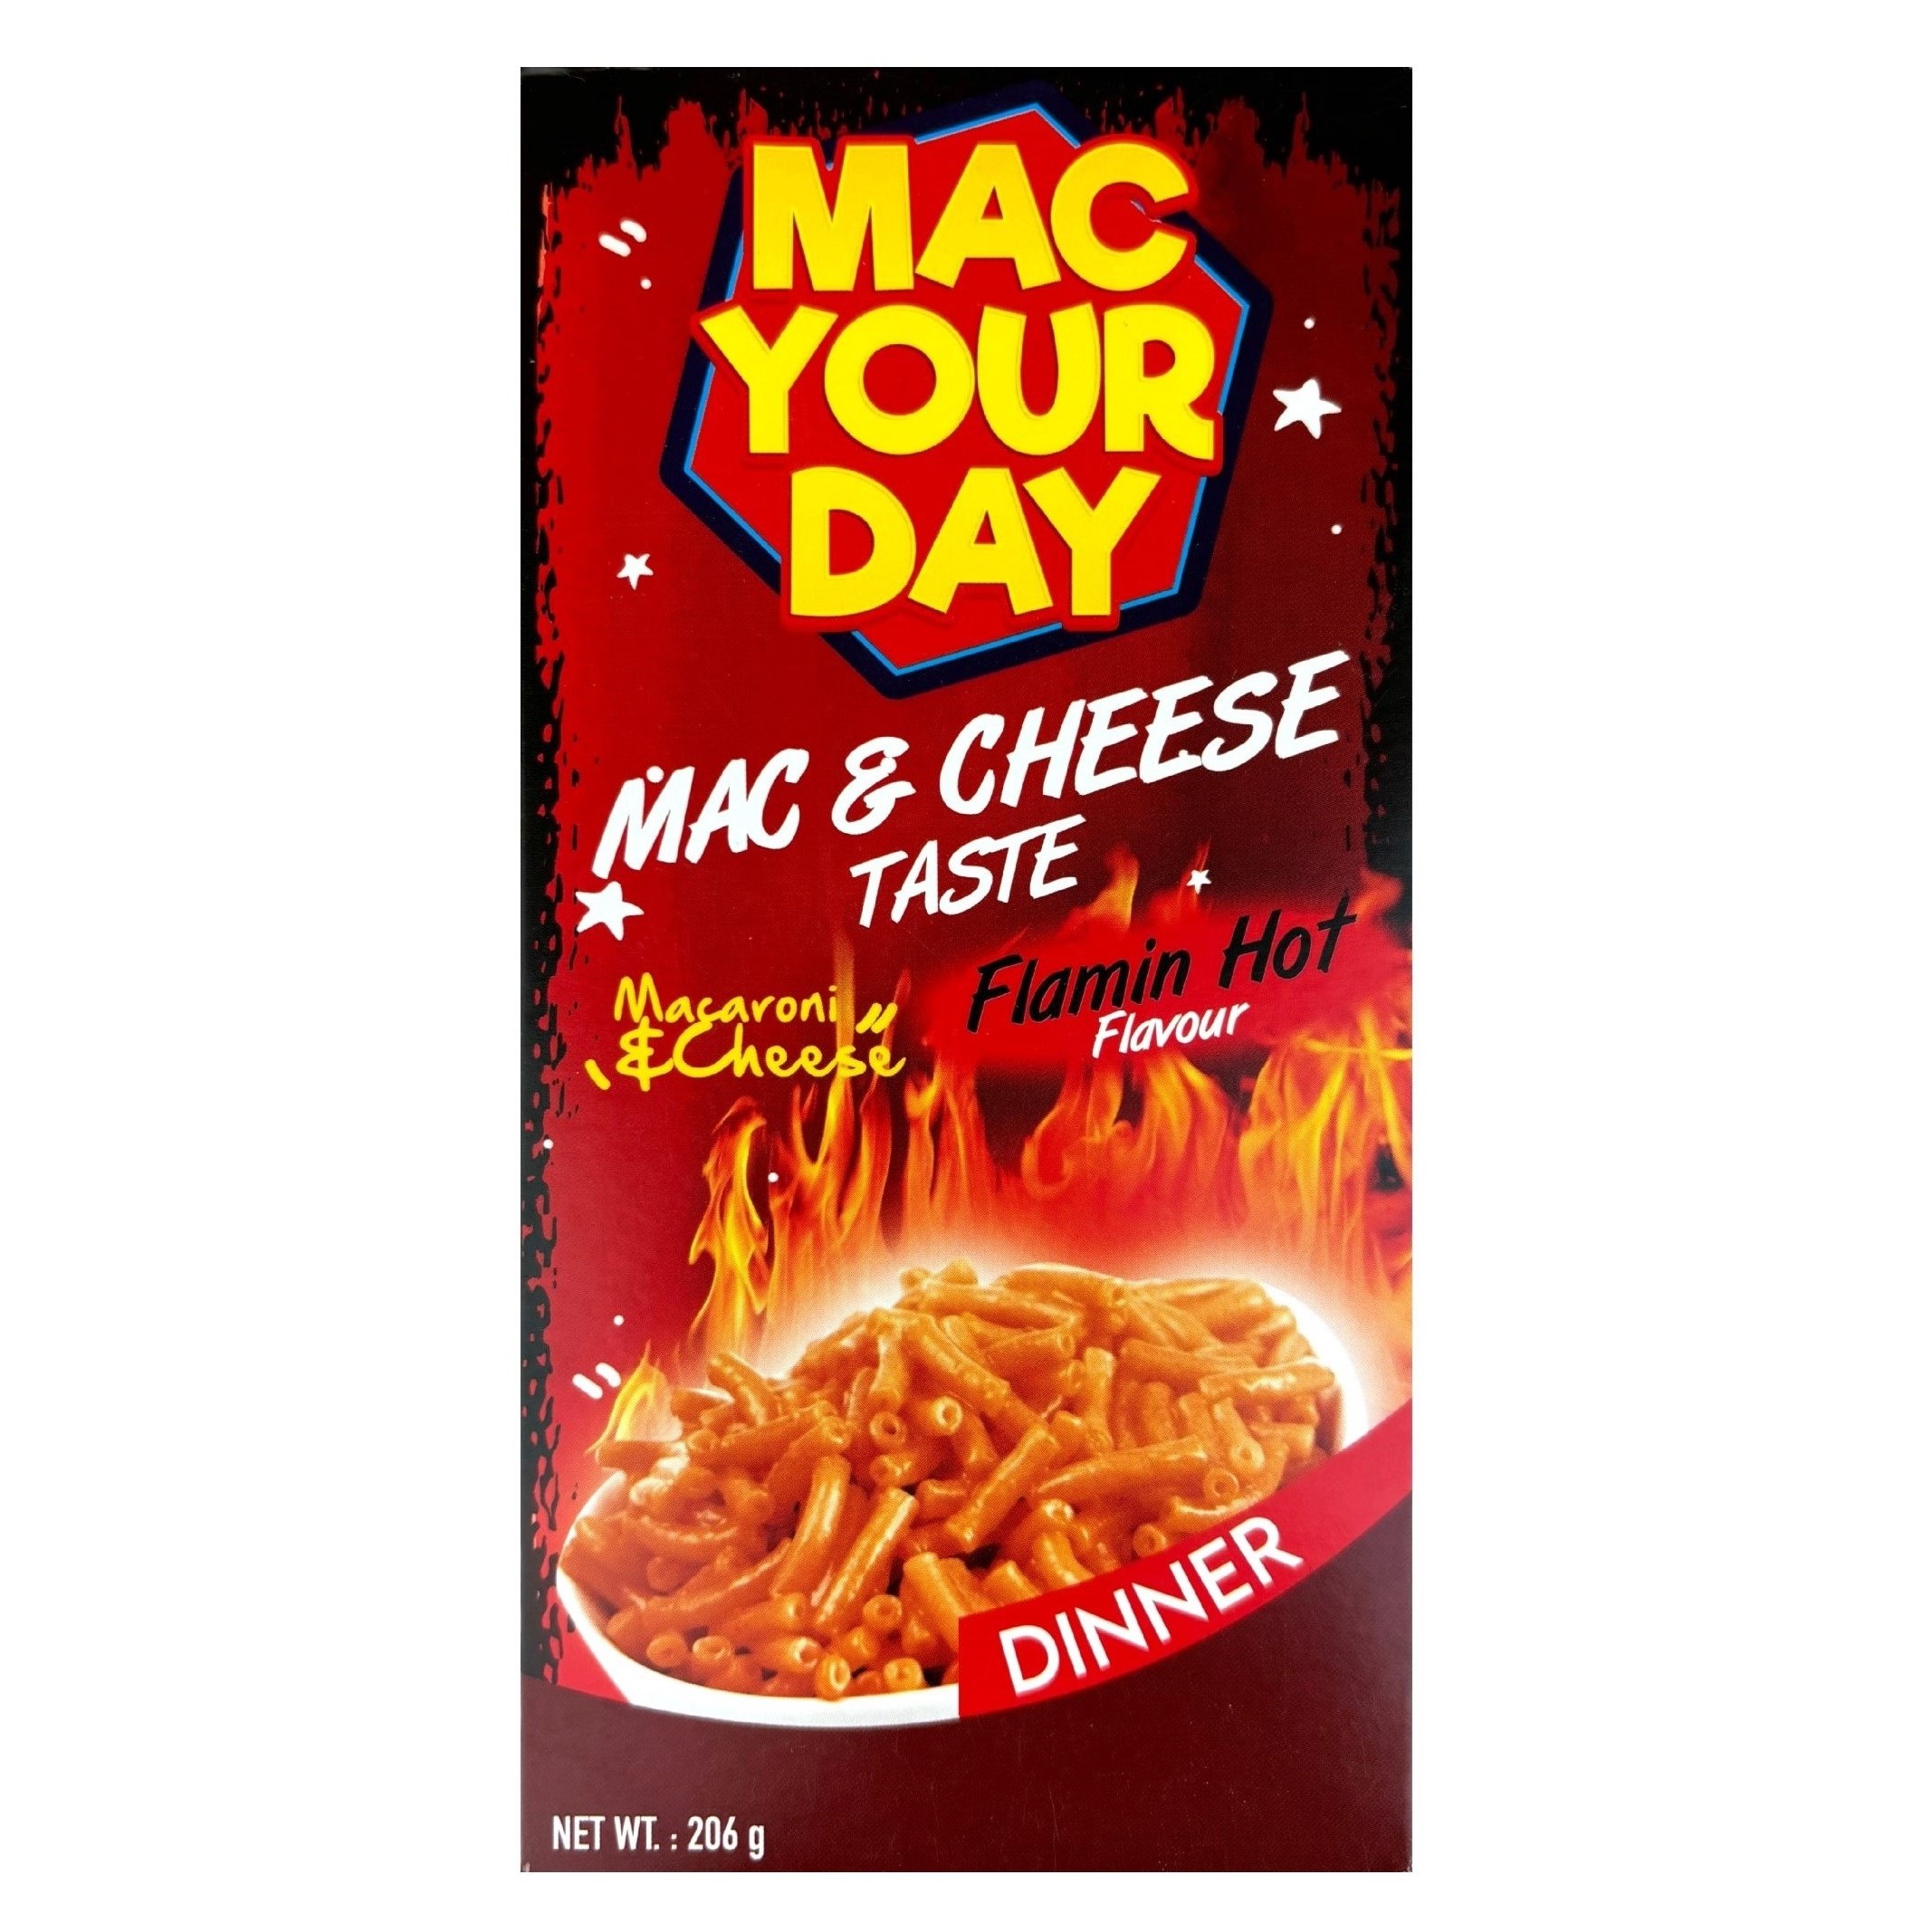 Makaronid MAC YOUR DAY (FLAMIN HOT), 206g foto